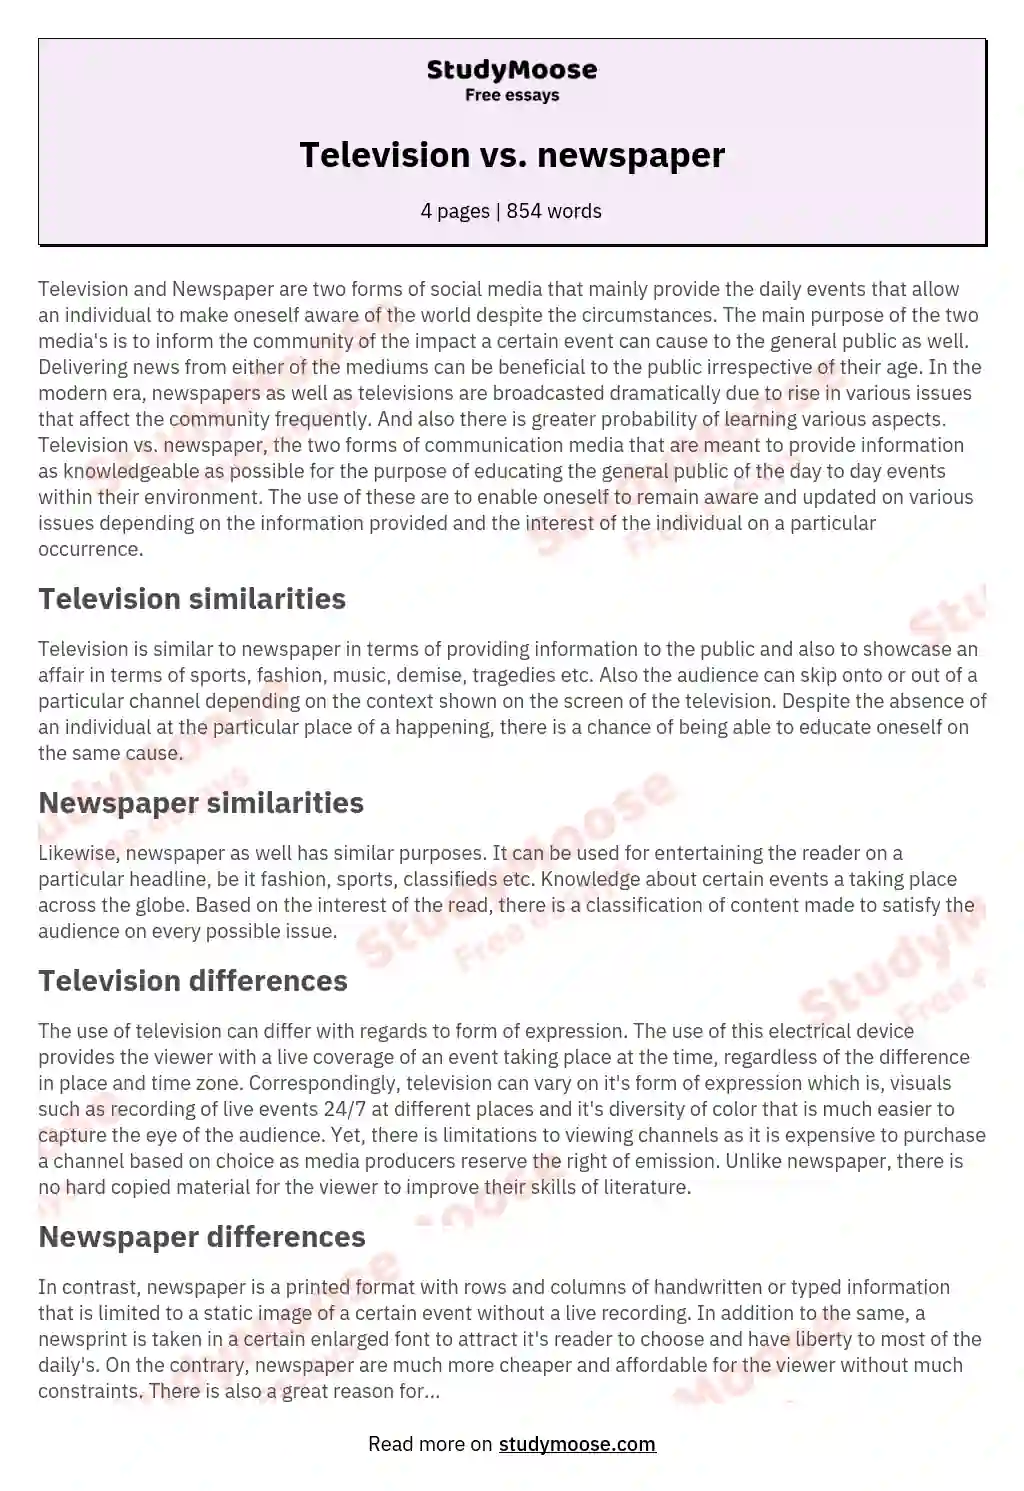 Television vs. newspaper essay